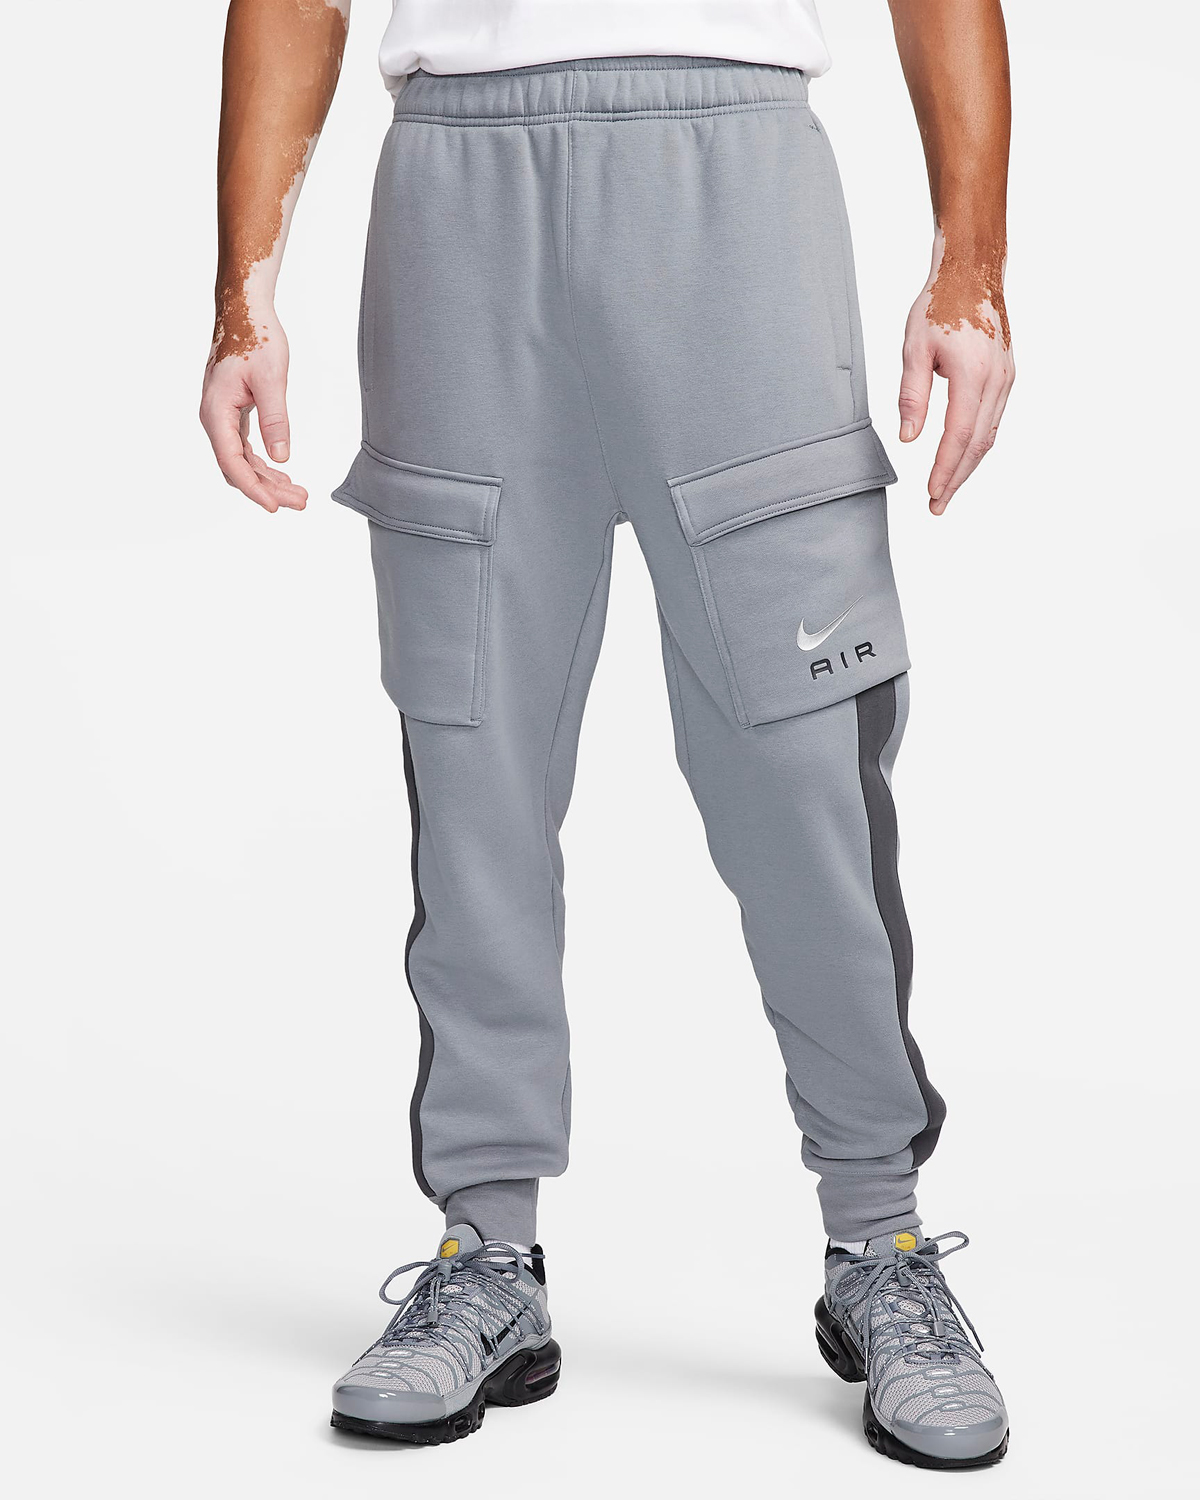 Nike-Air-Fleece-Cargo-Pants-Cool-Grey-Anthracite-1